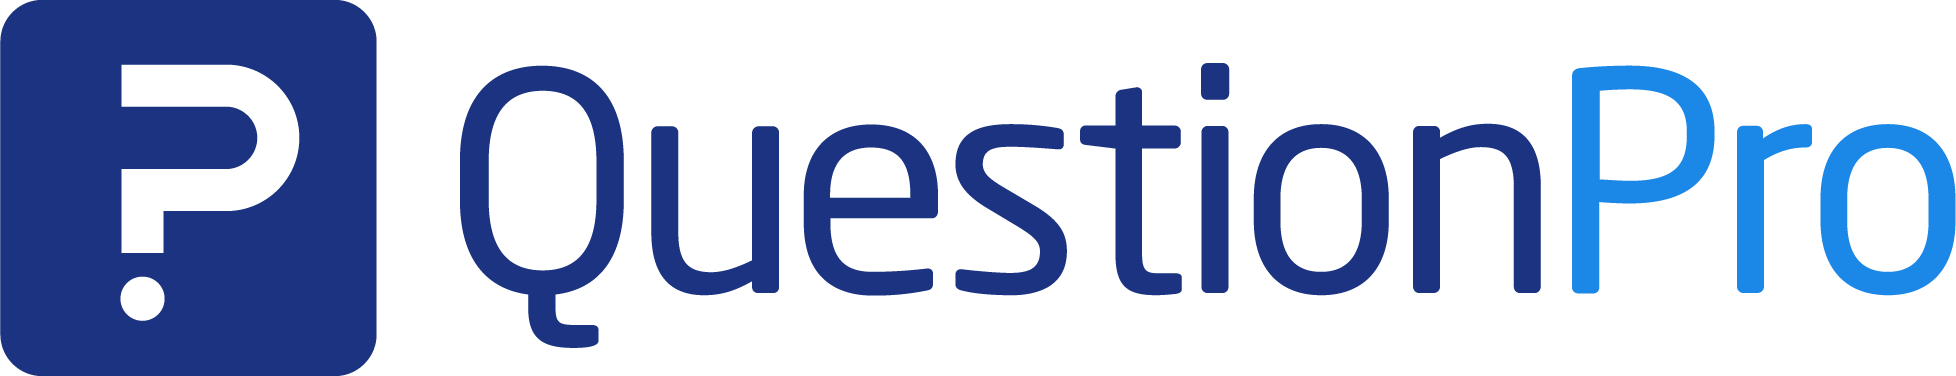 QuestionPro logo